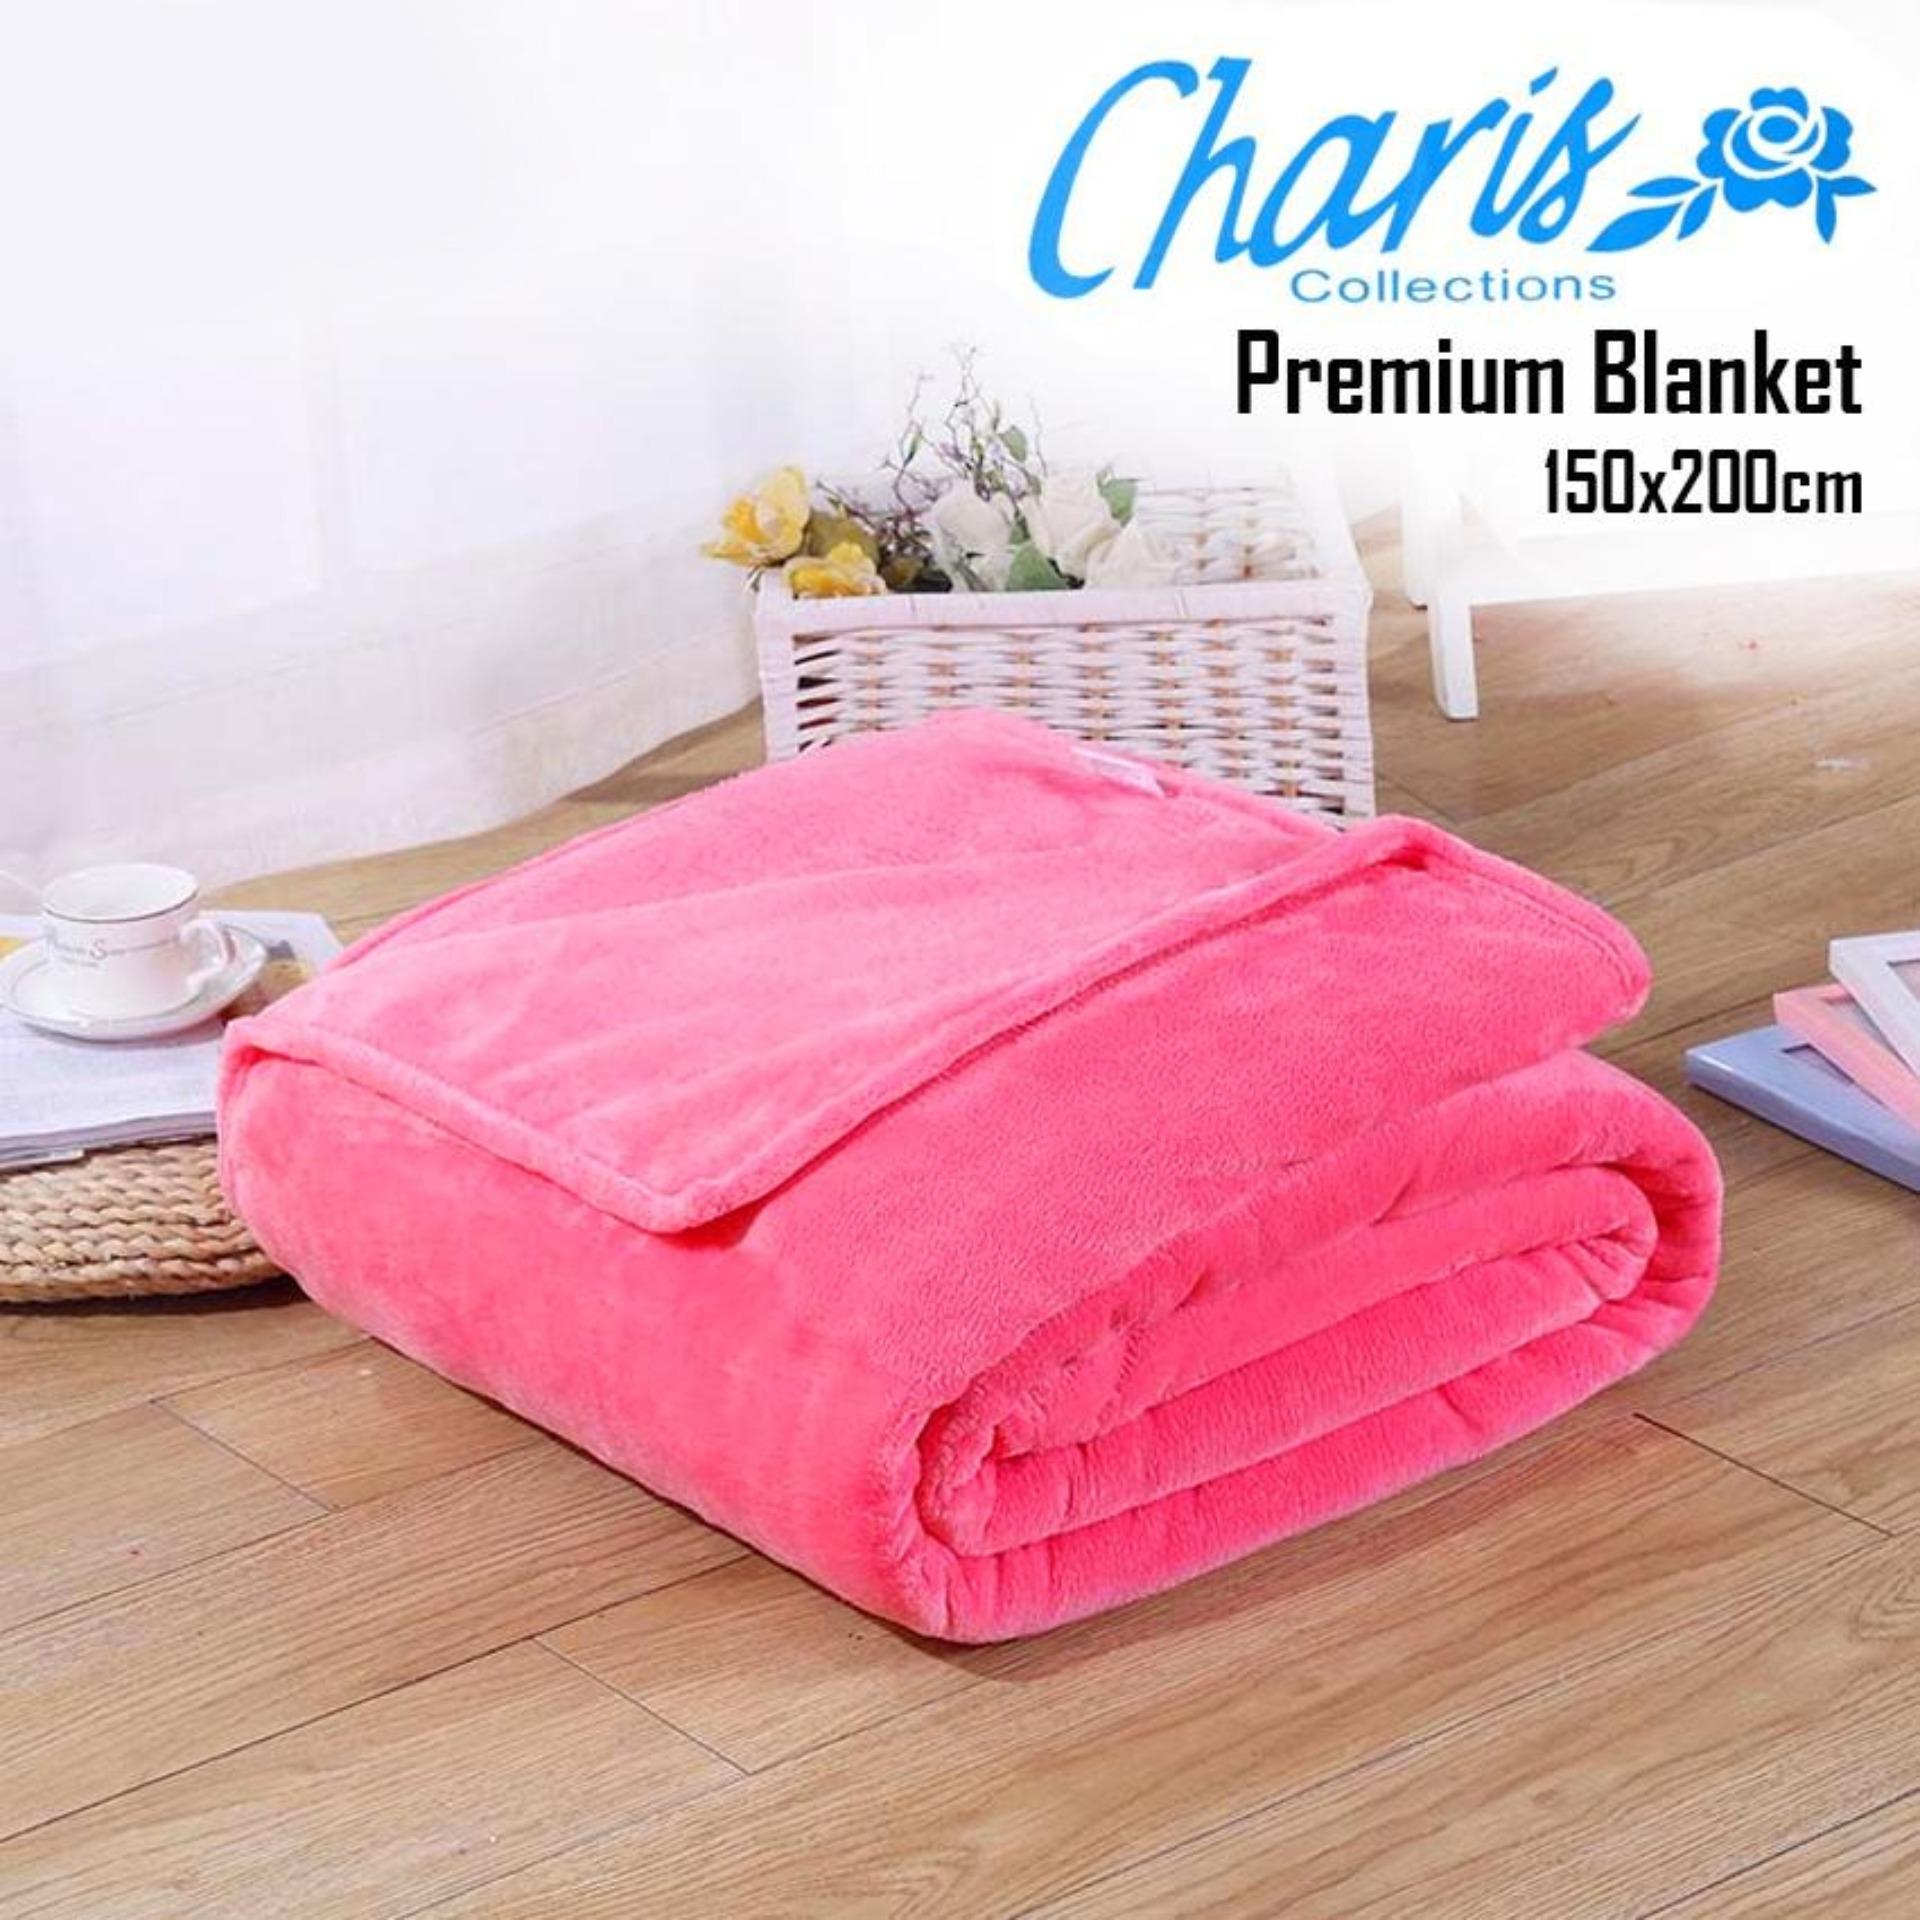 Semi Polar Fleece Blanket Soft Charis Collection Premium Blanket 150x200cm Pink Lazada PH